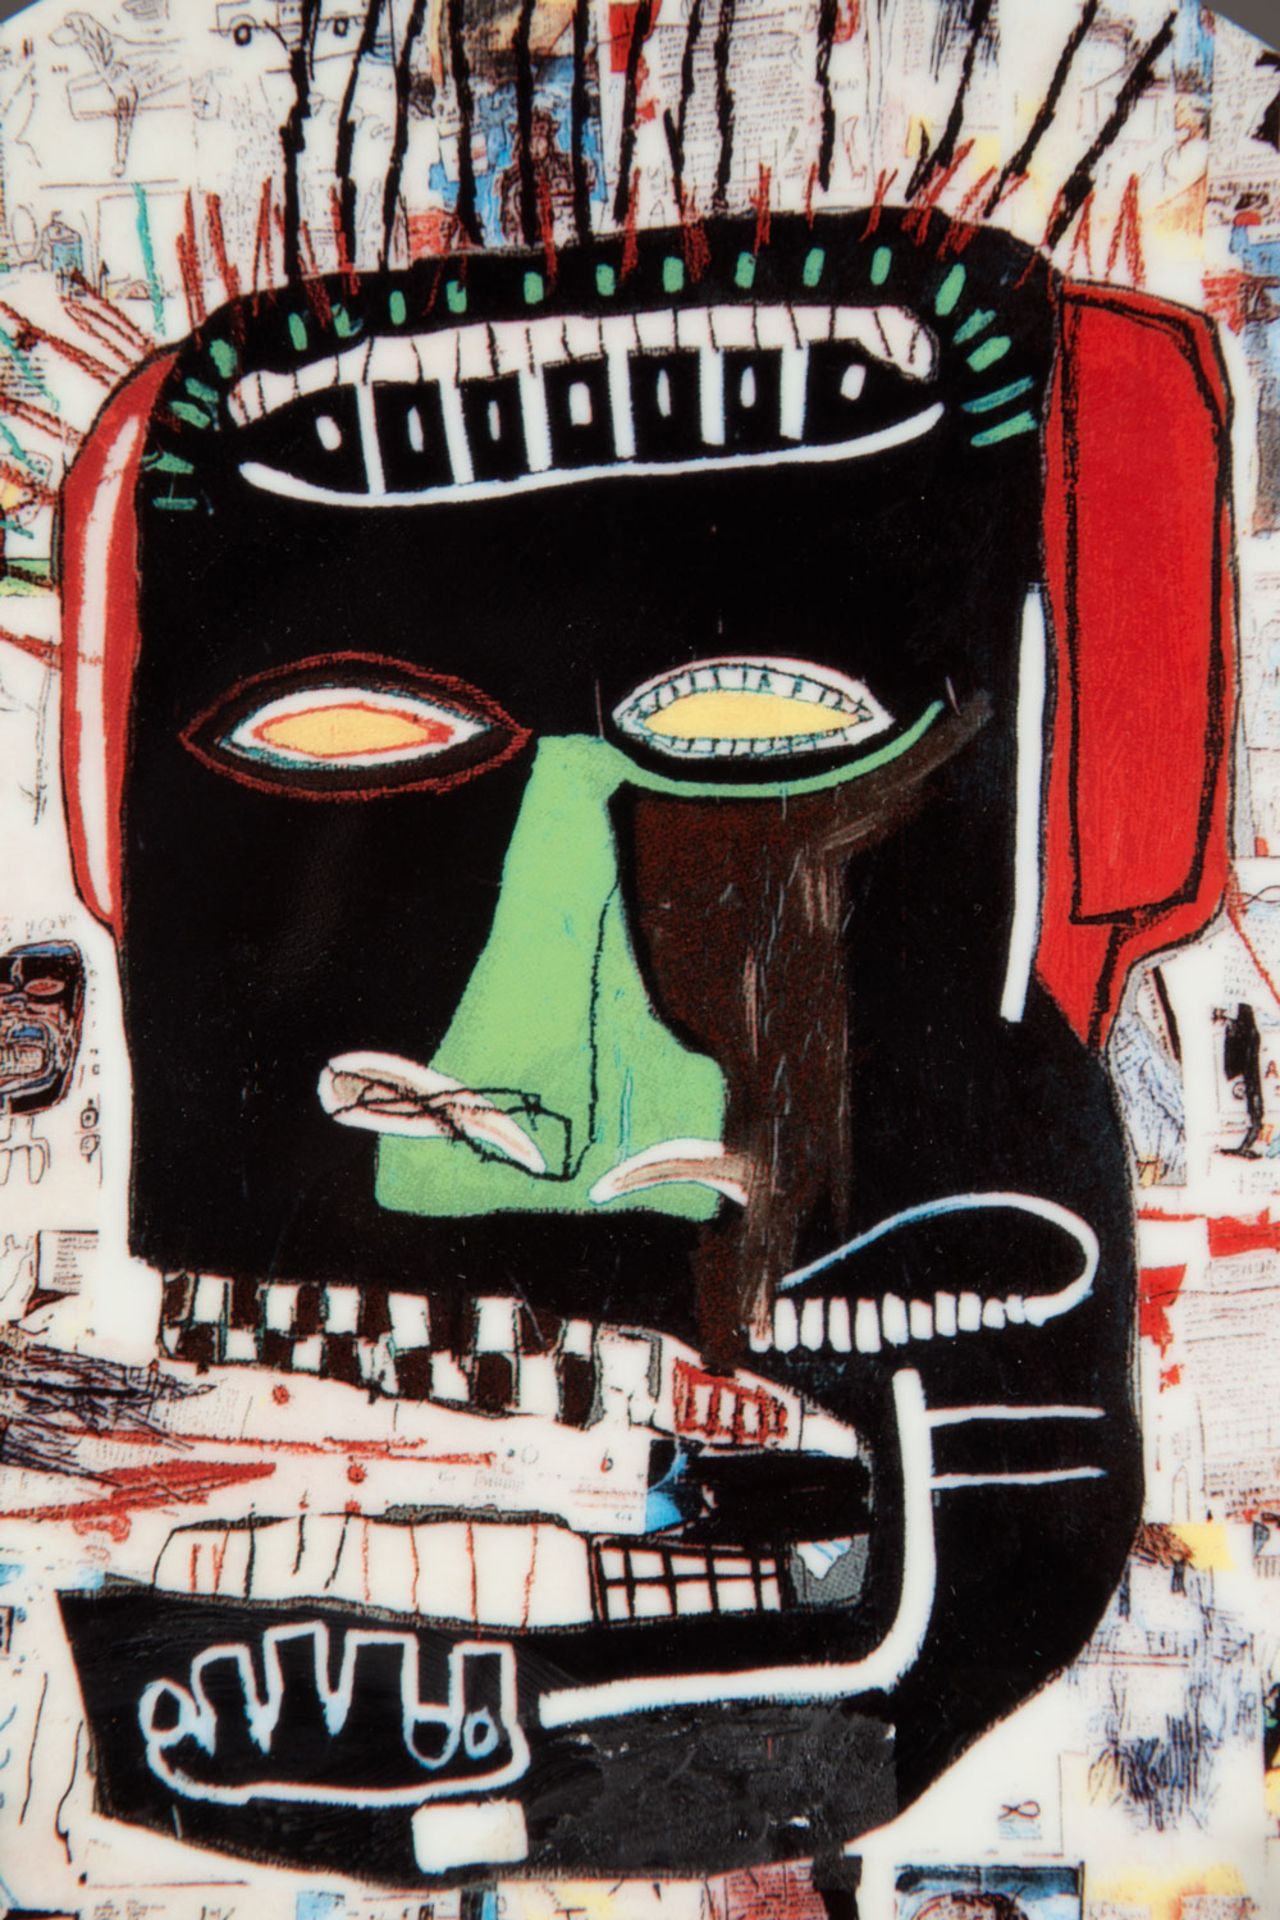 Jean Michele Basquiat (1960-1988) - Image 2 of 3